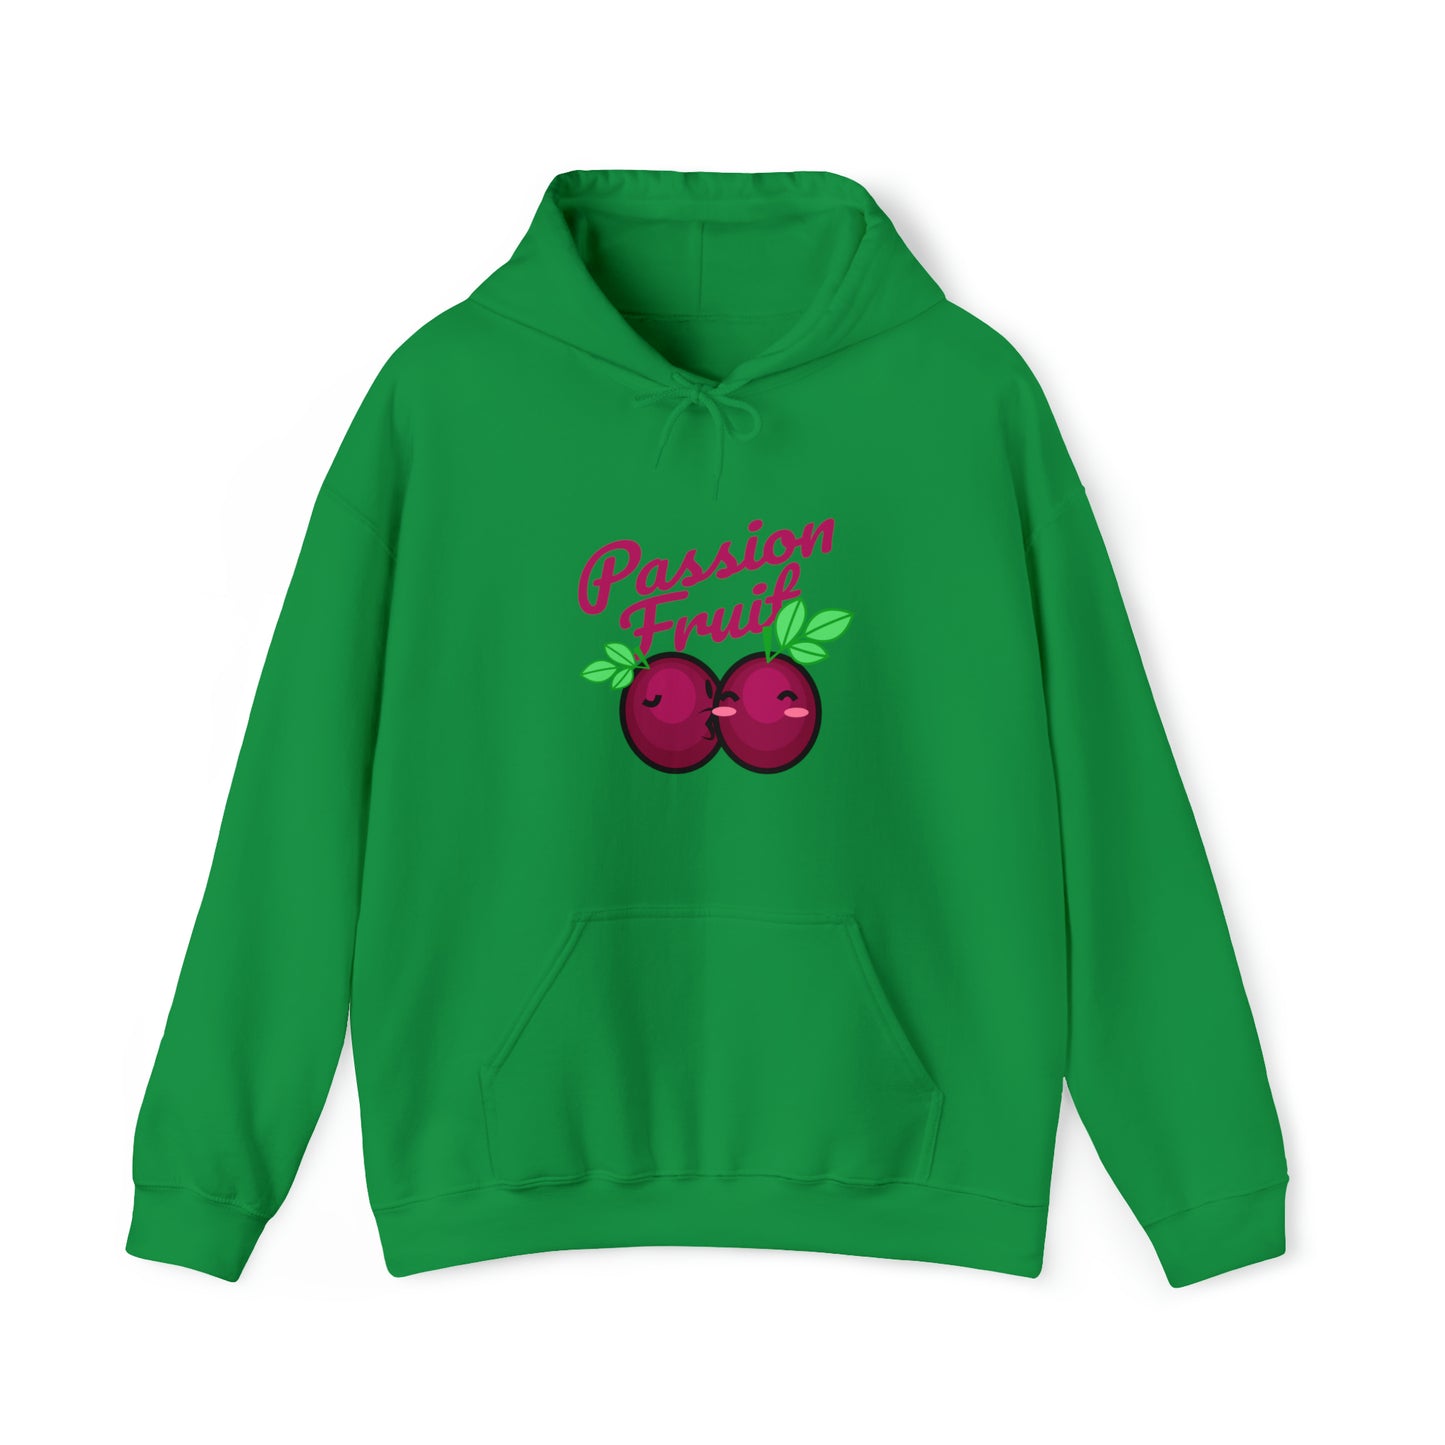 Custom Parody Hooded Sweatshirt, Passion fruit design